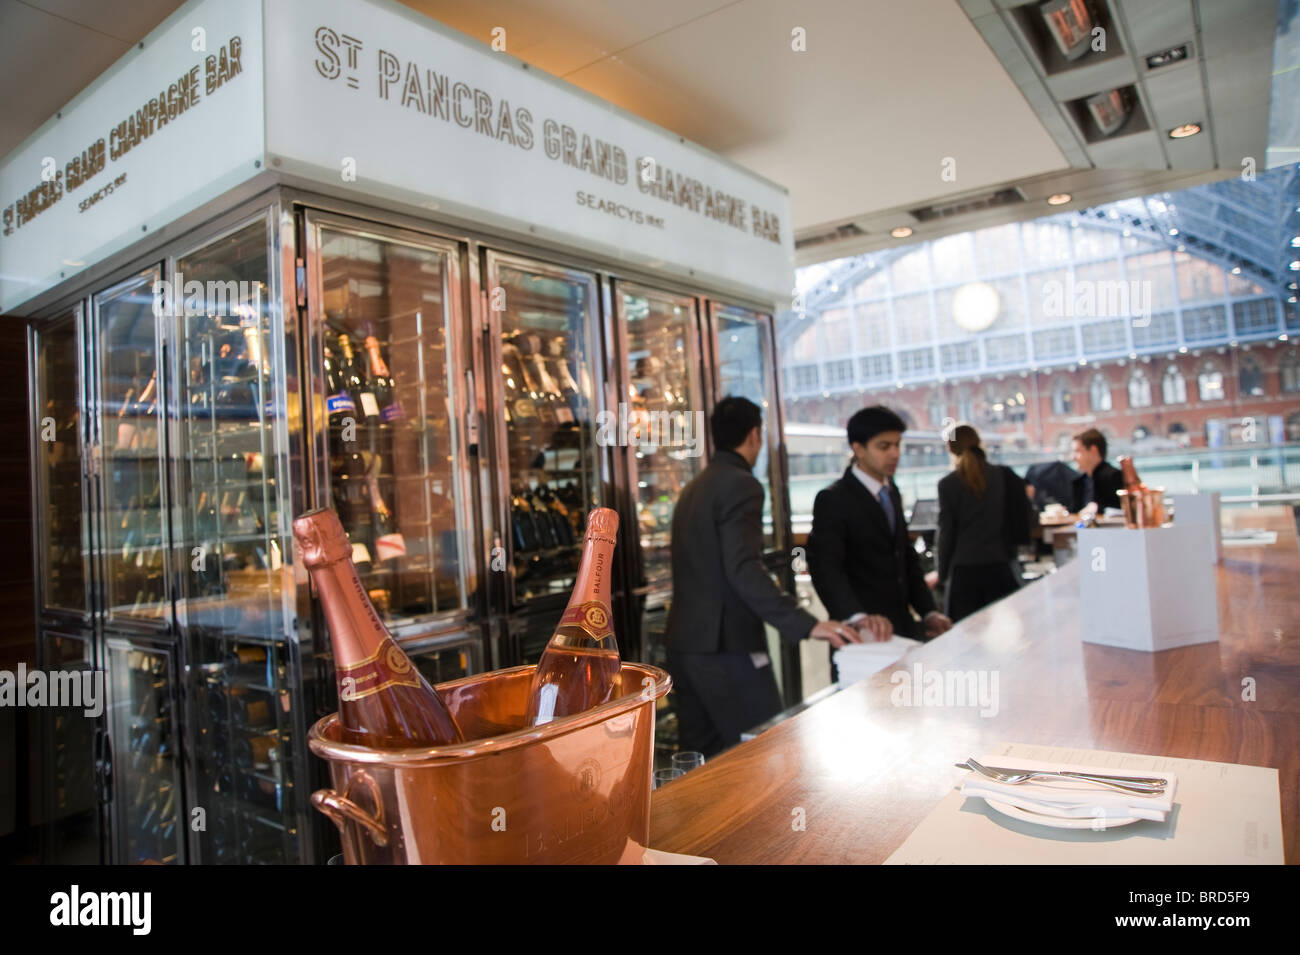 St Pancras Station Worlds Longest Champagne Bar Stock Photo